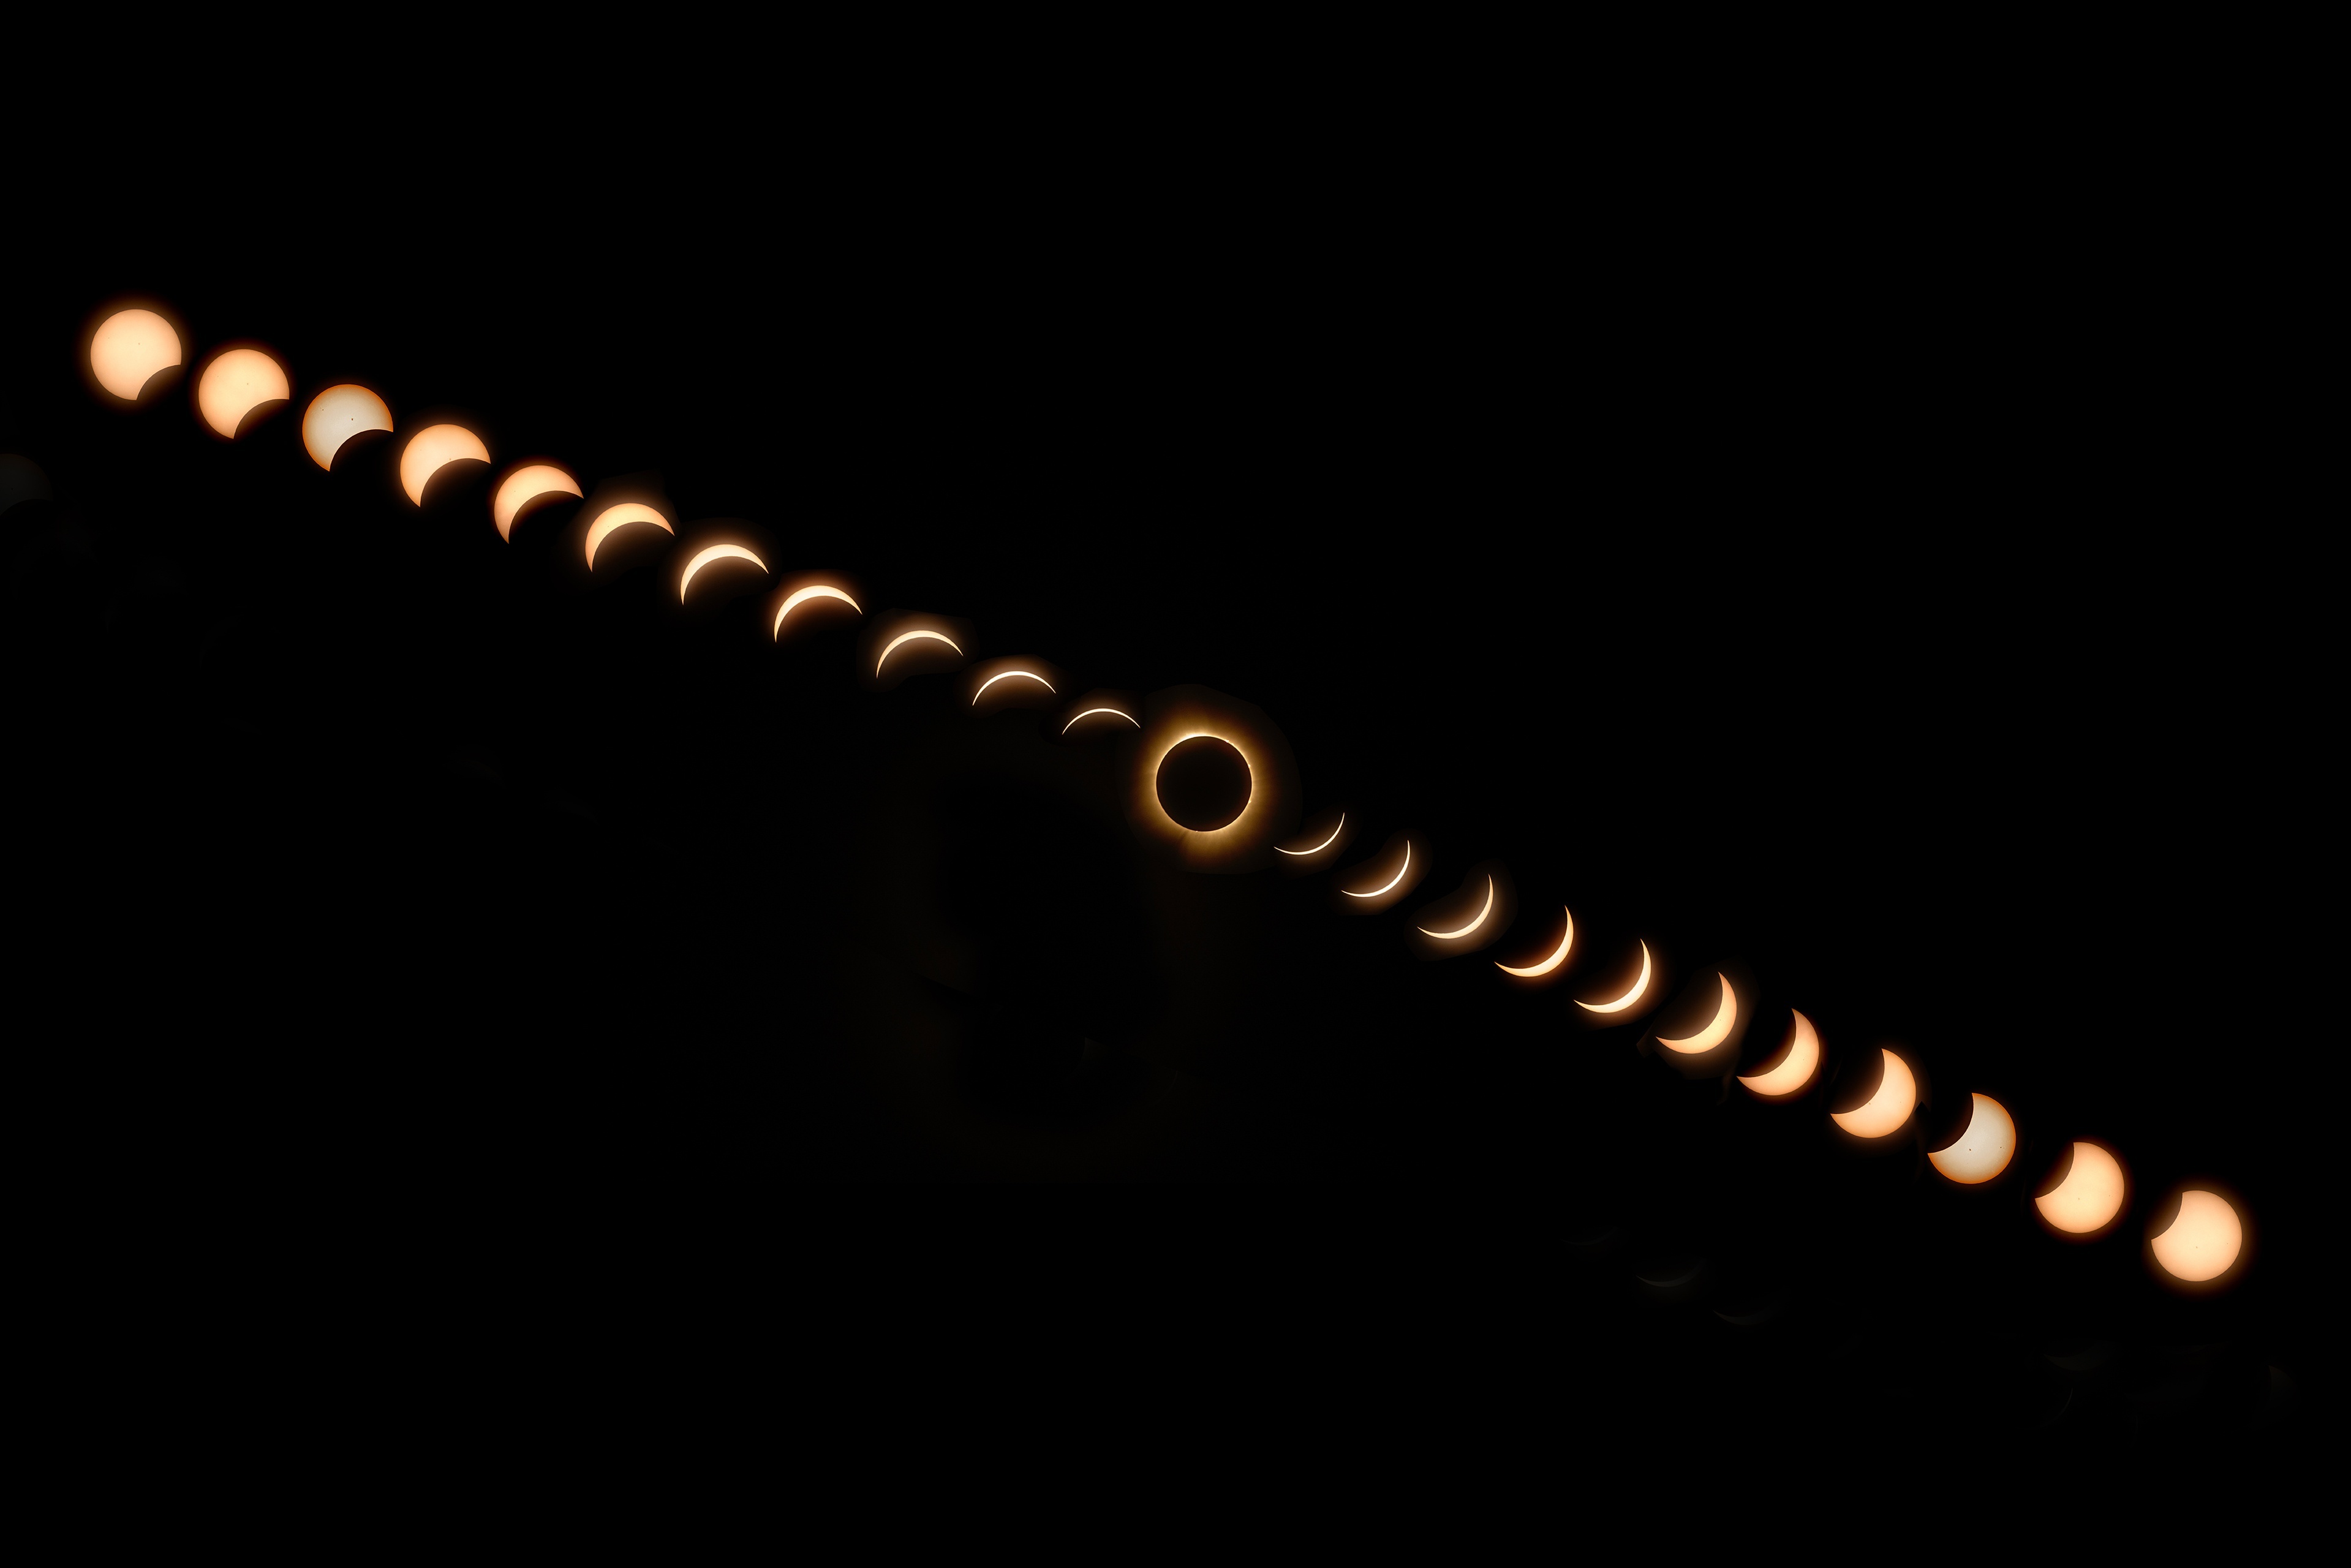 bgsu totality eclipse phases